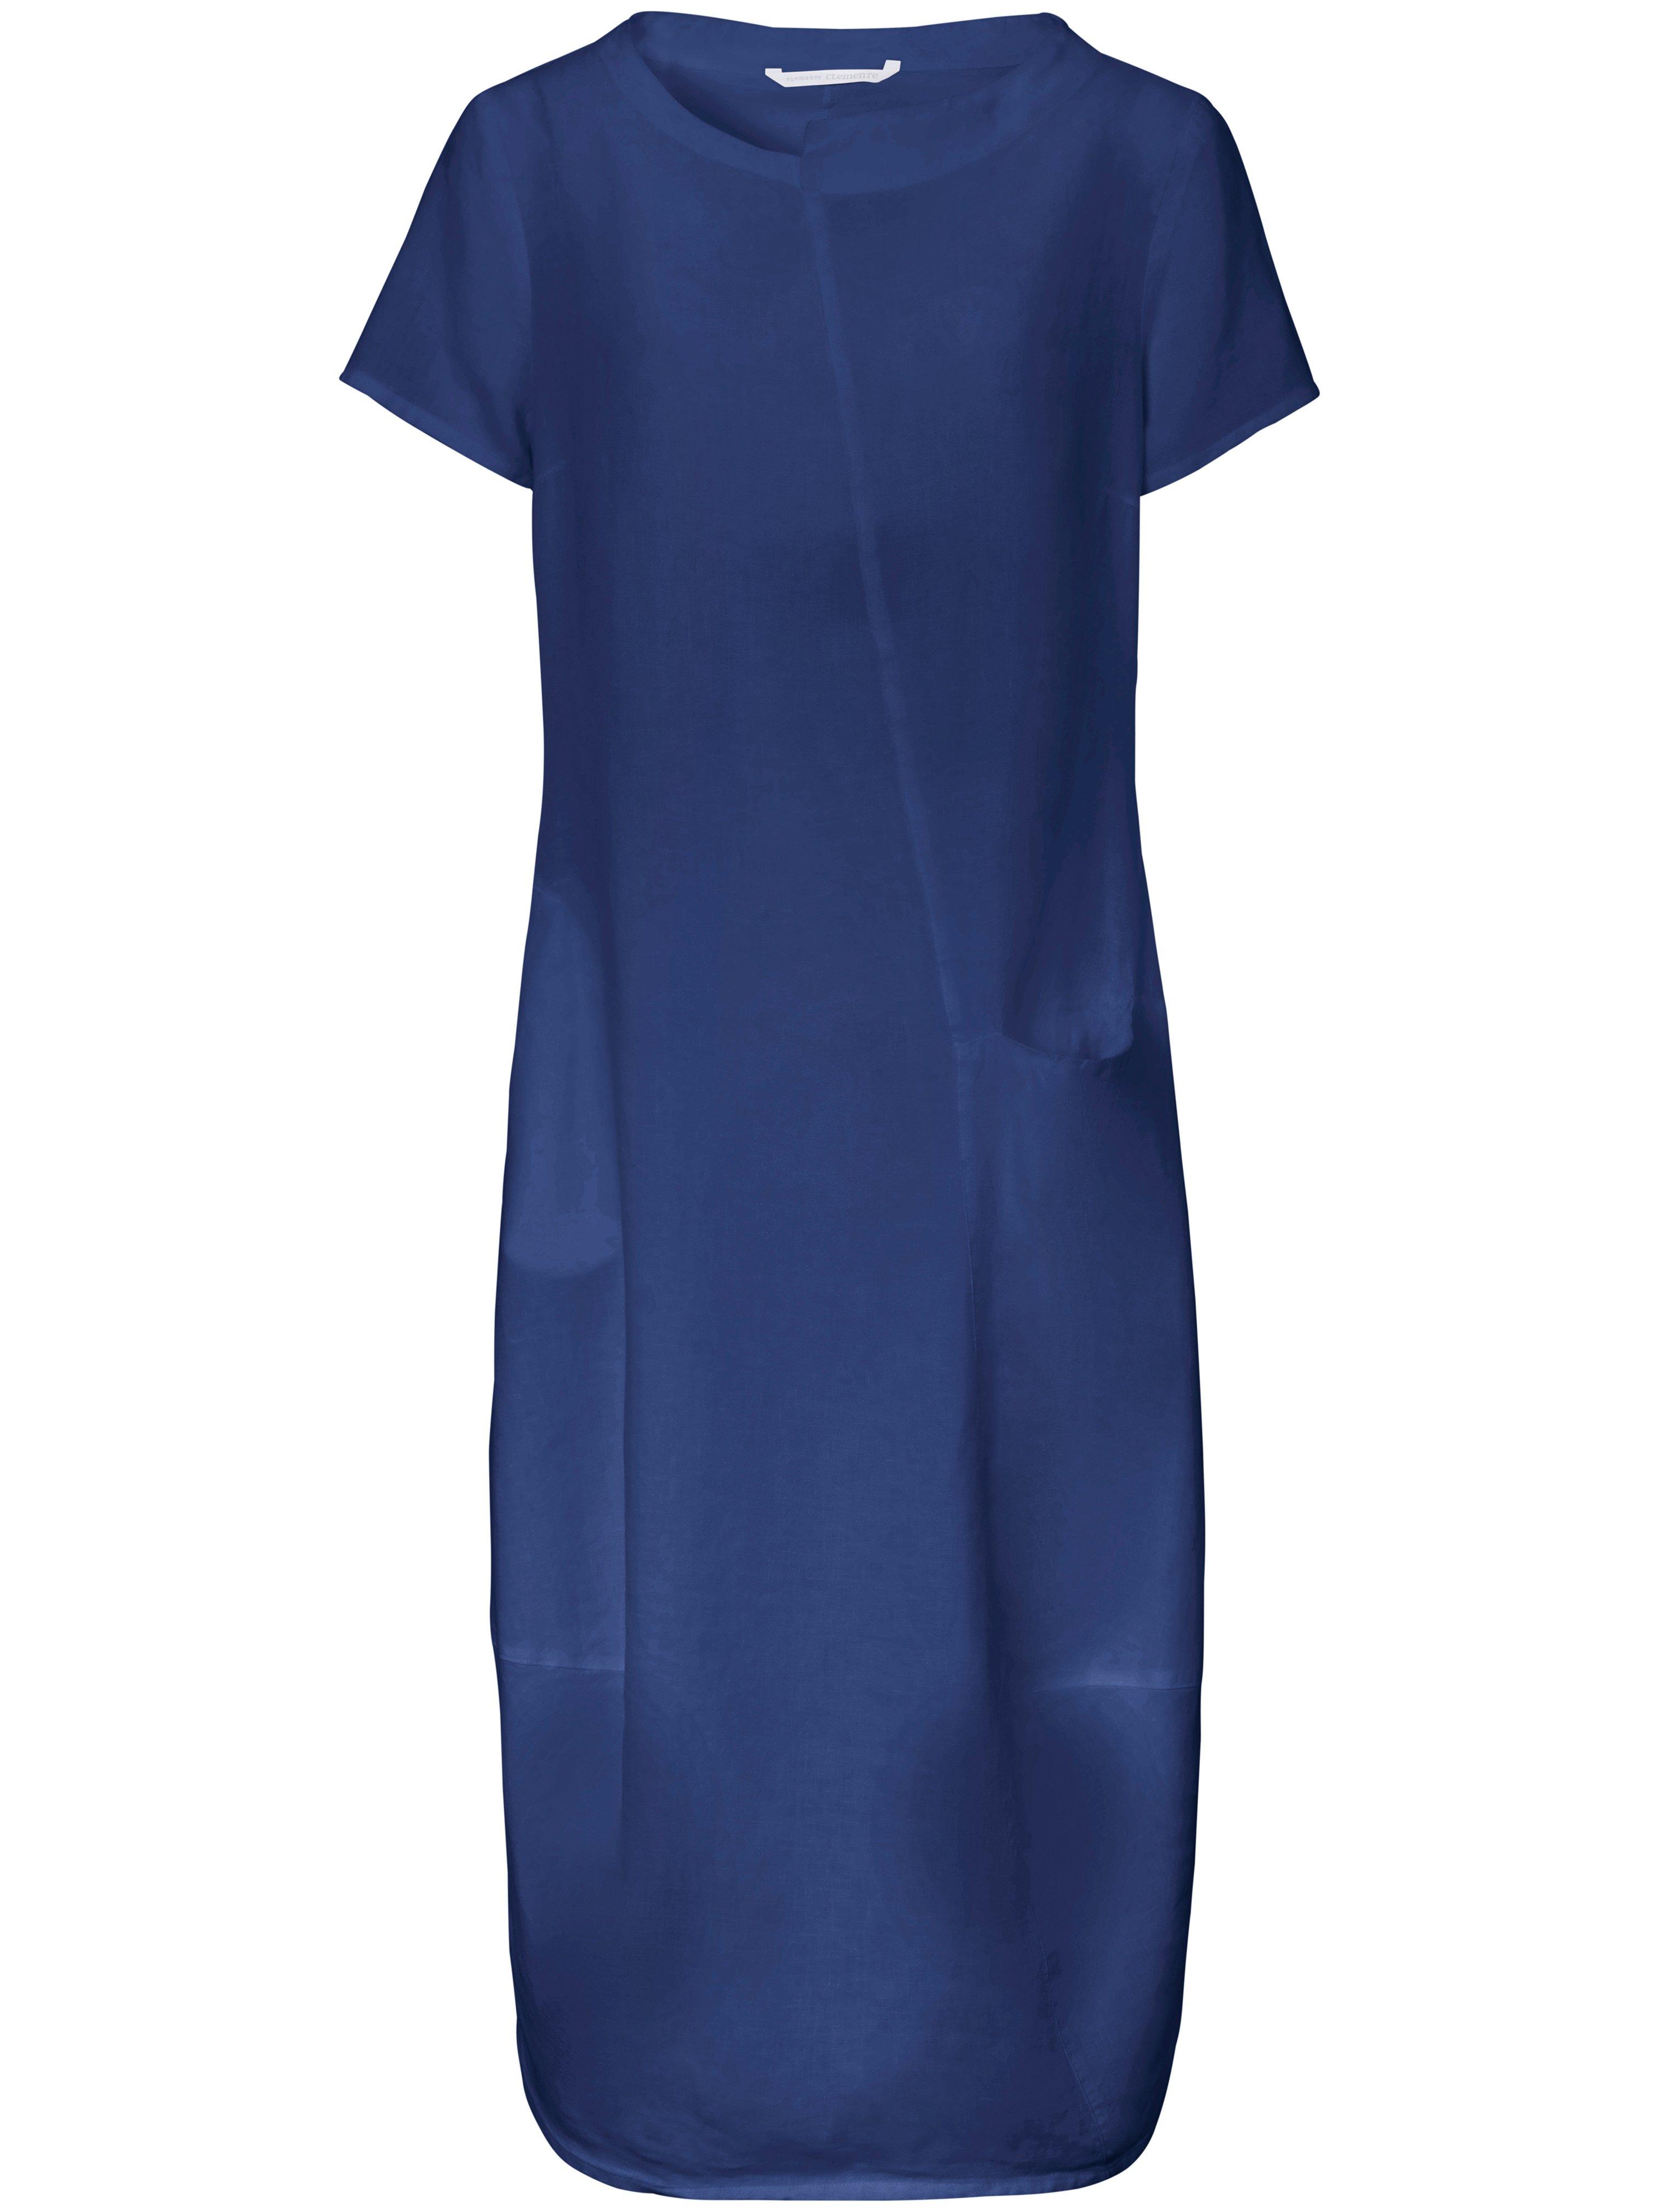 elemente clemente - Dress in 100% linen with short sleeves - indigo